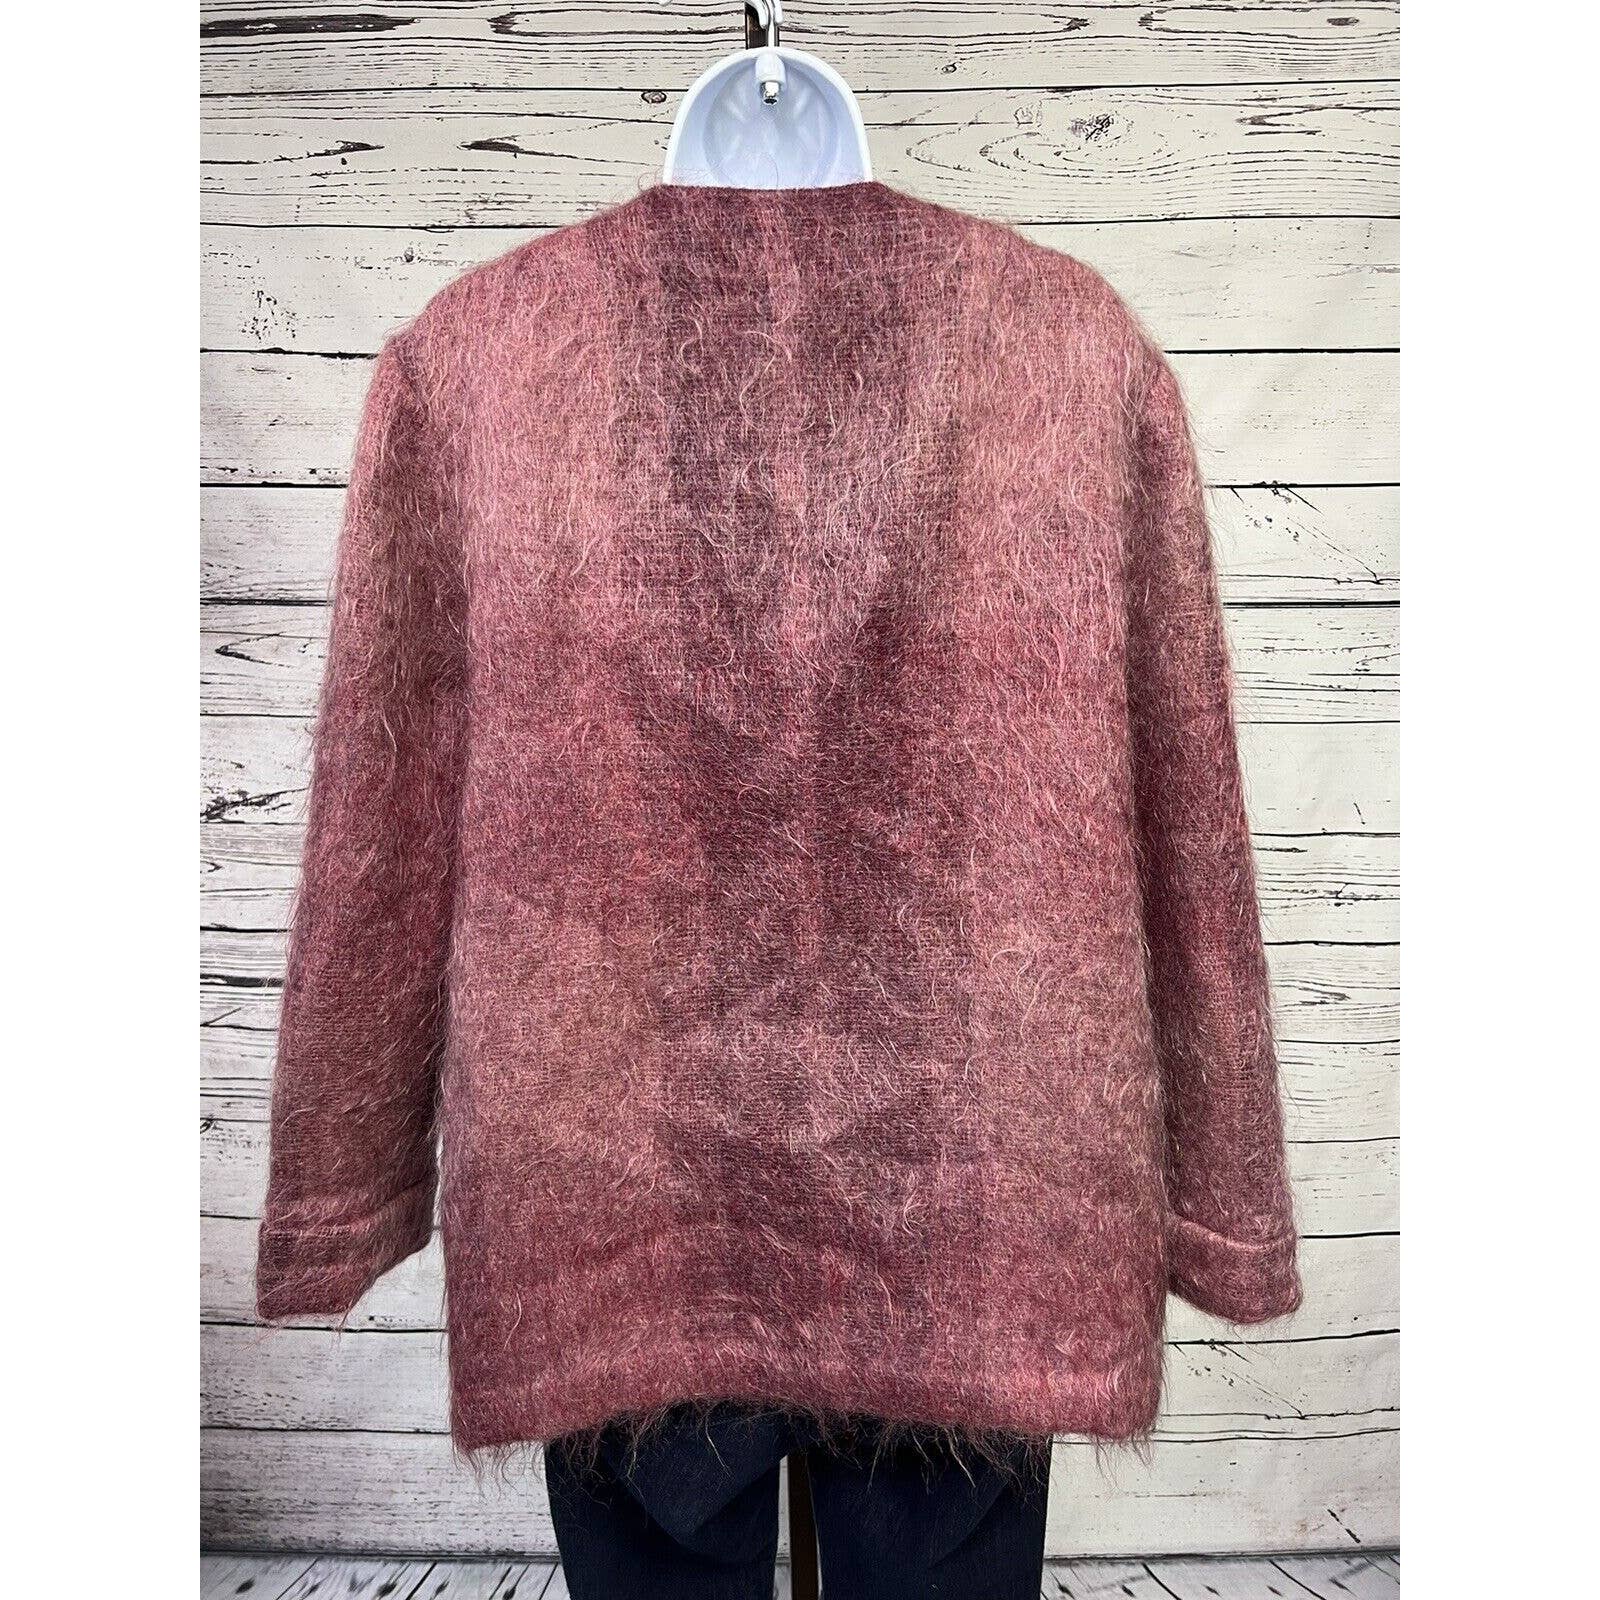 Andrew Stewart Open Front Jacket Women’s Medium Mohair Wool Blend Berry Color